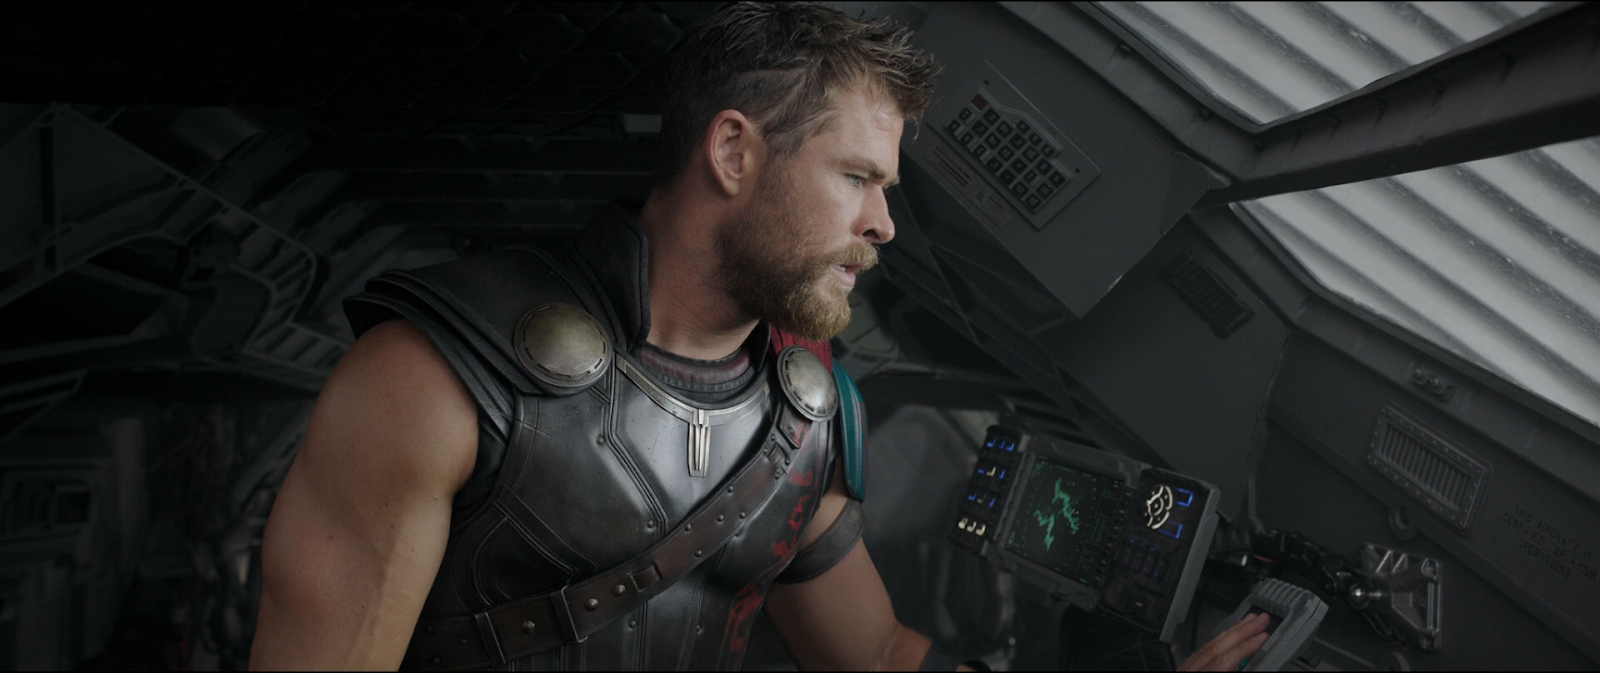 Thor Ragnarok (2017) HD 720p Latino 